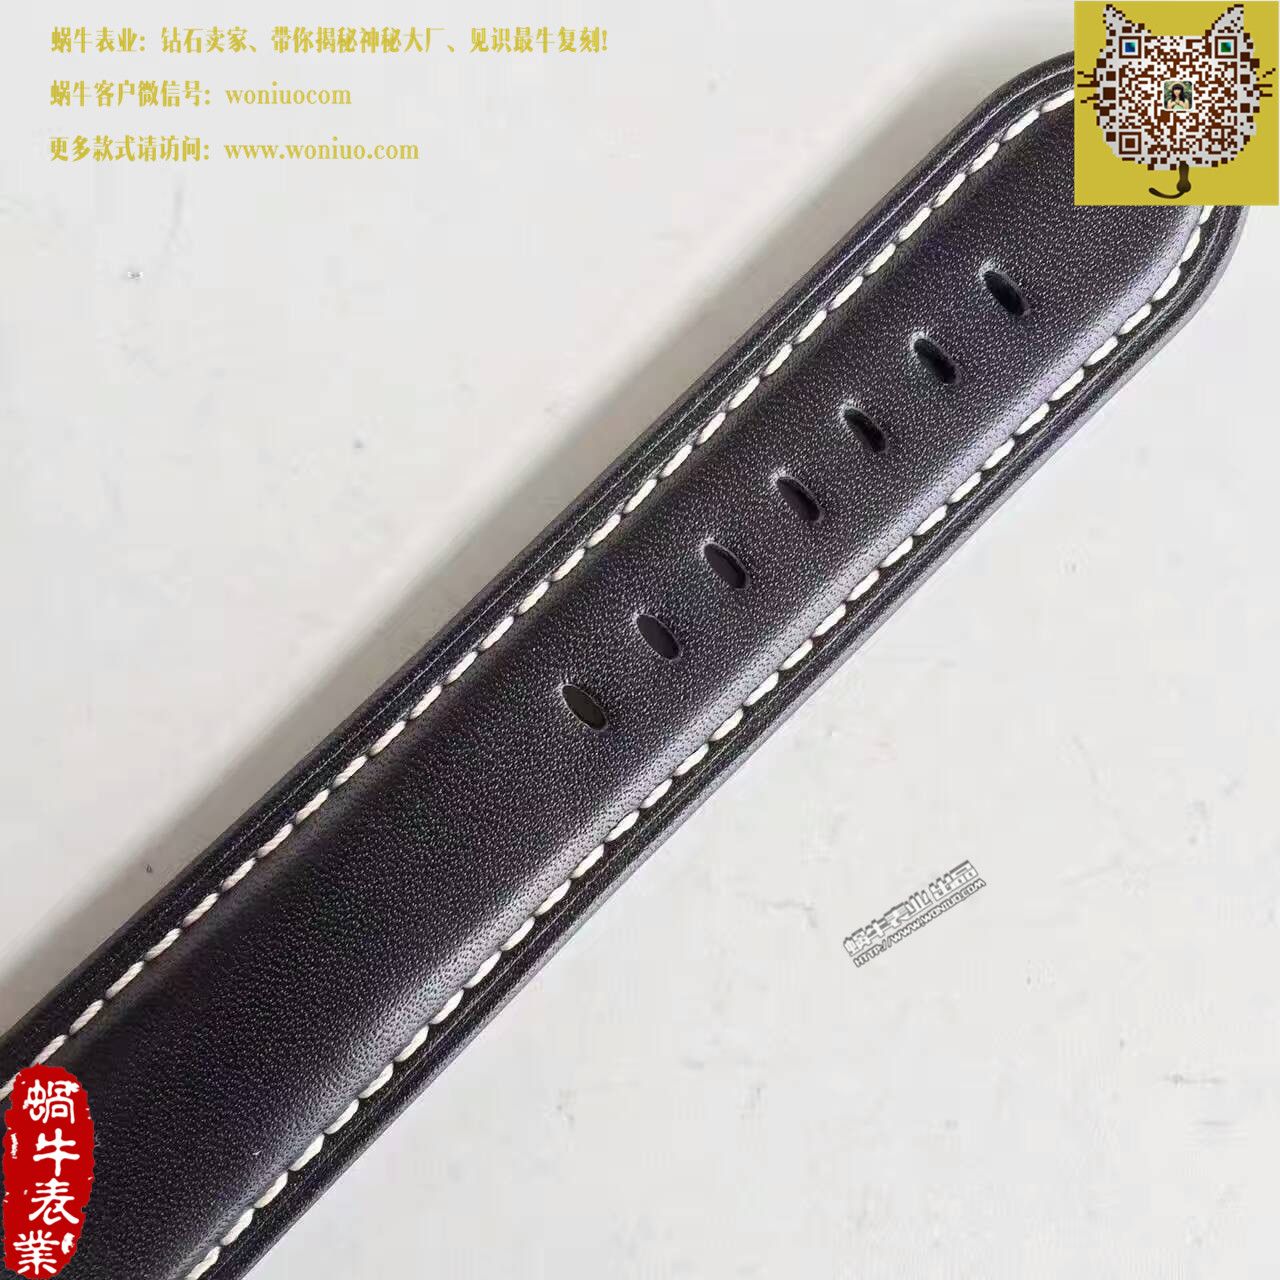 【ZF厂1:1超A高仿手表】沛纳海LUMINOR 1950系列PAM01359腕表 / PA003